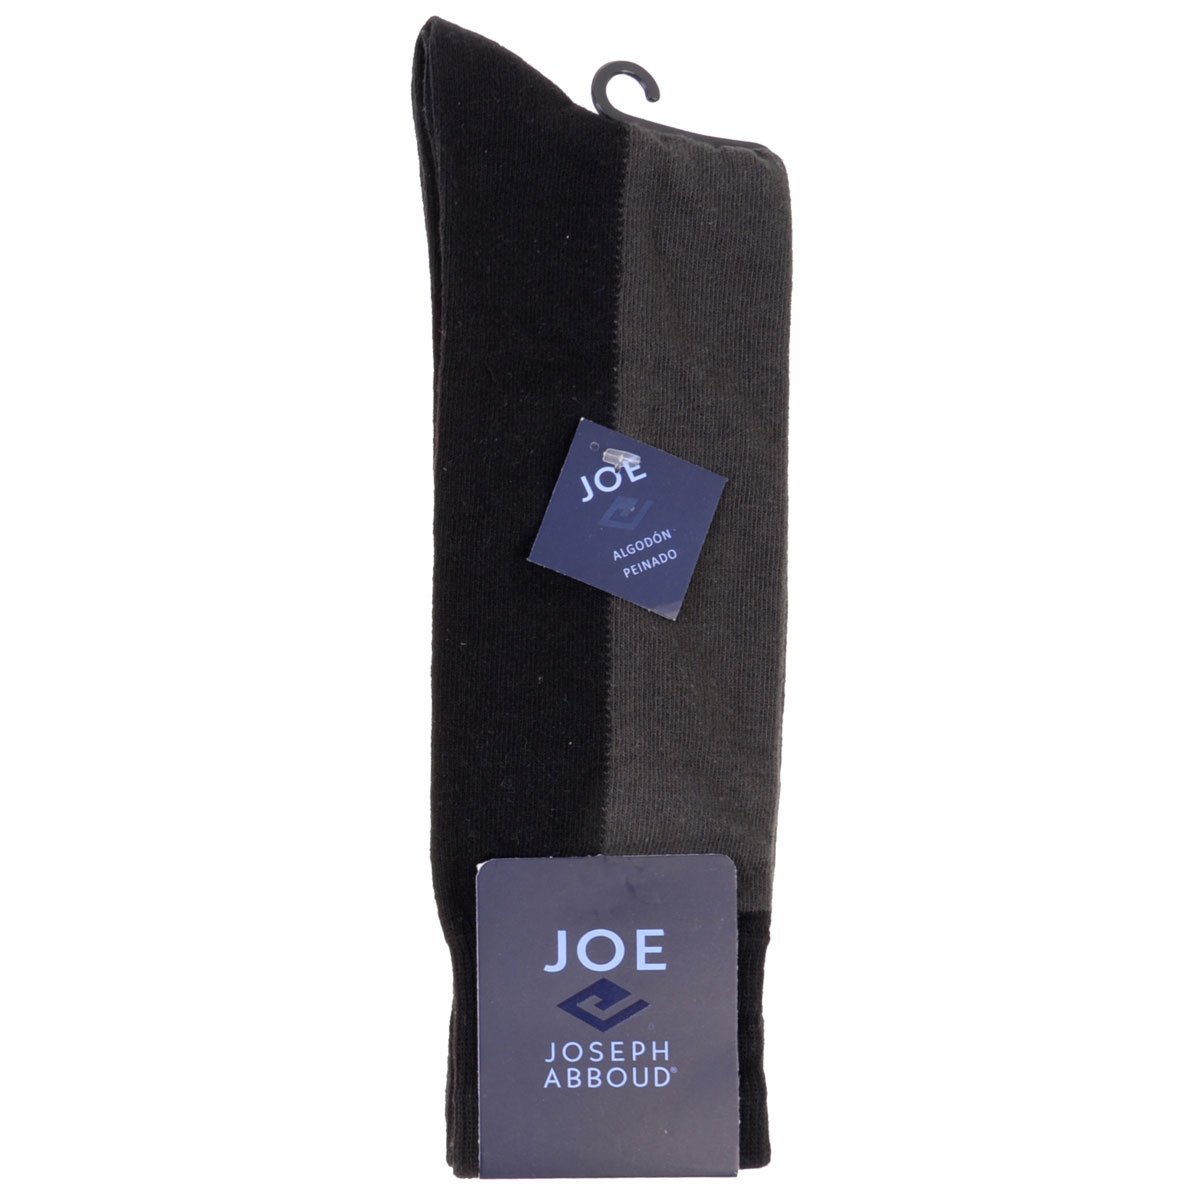 Calcetines de Algodón Peinado Joe Joseph Abboud